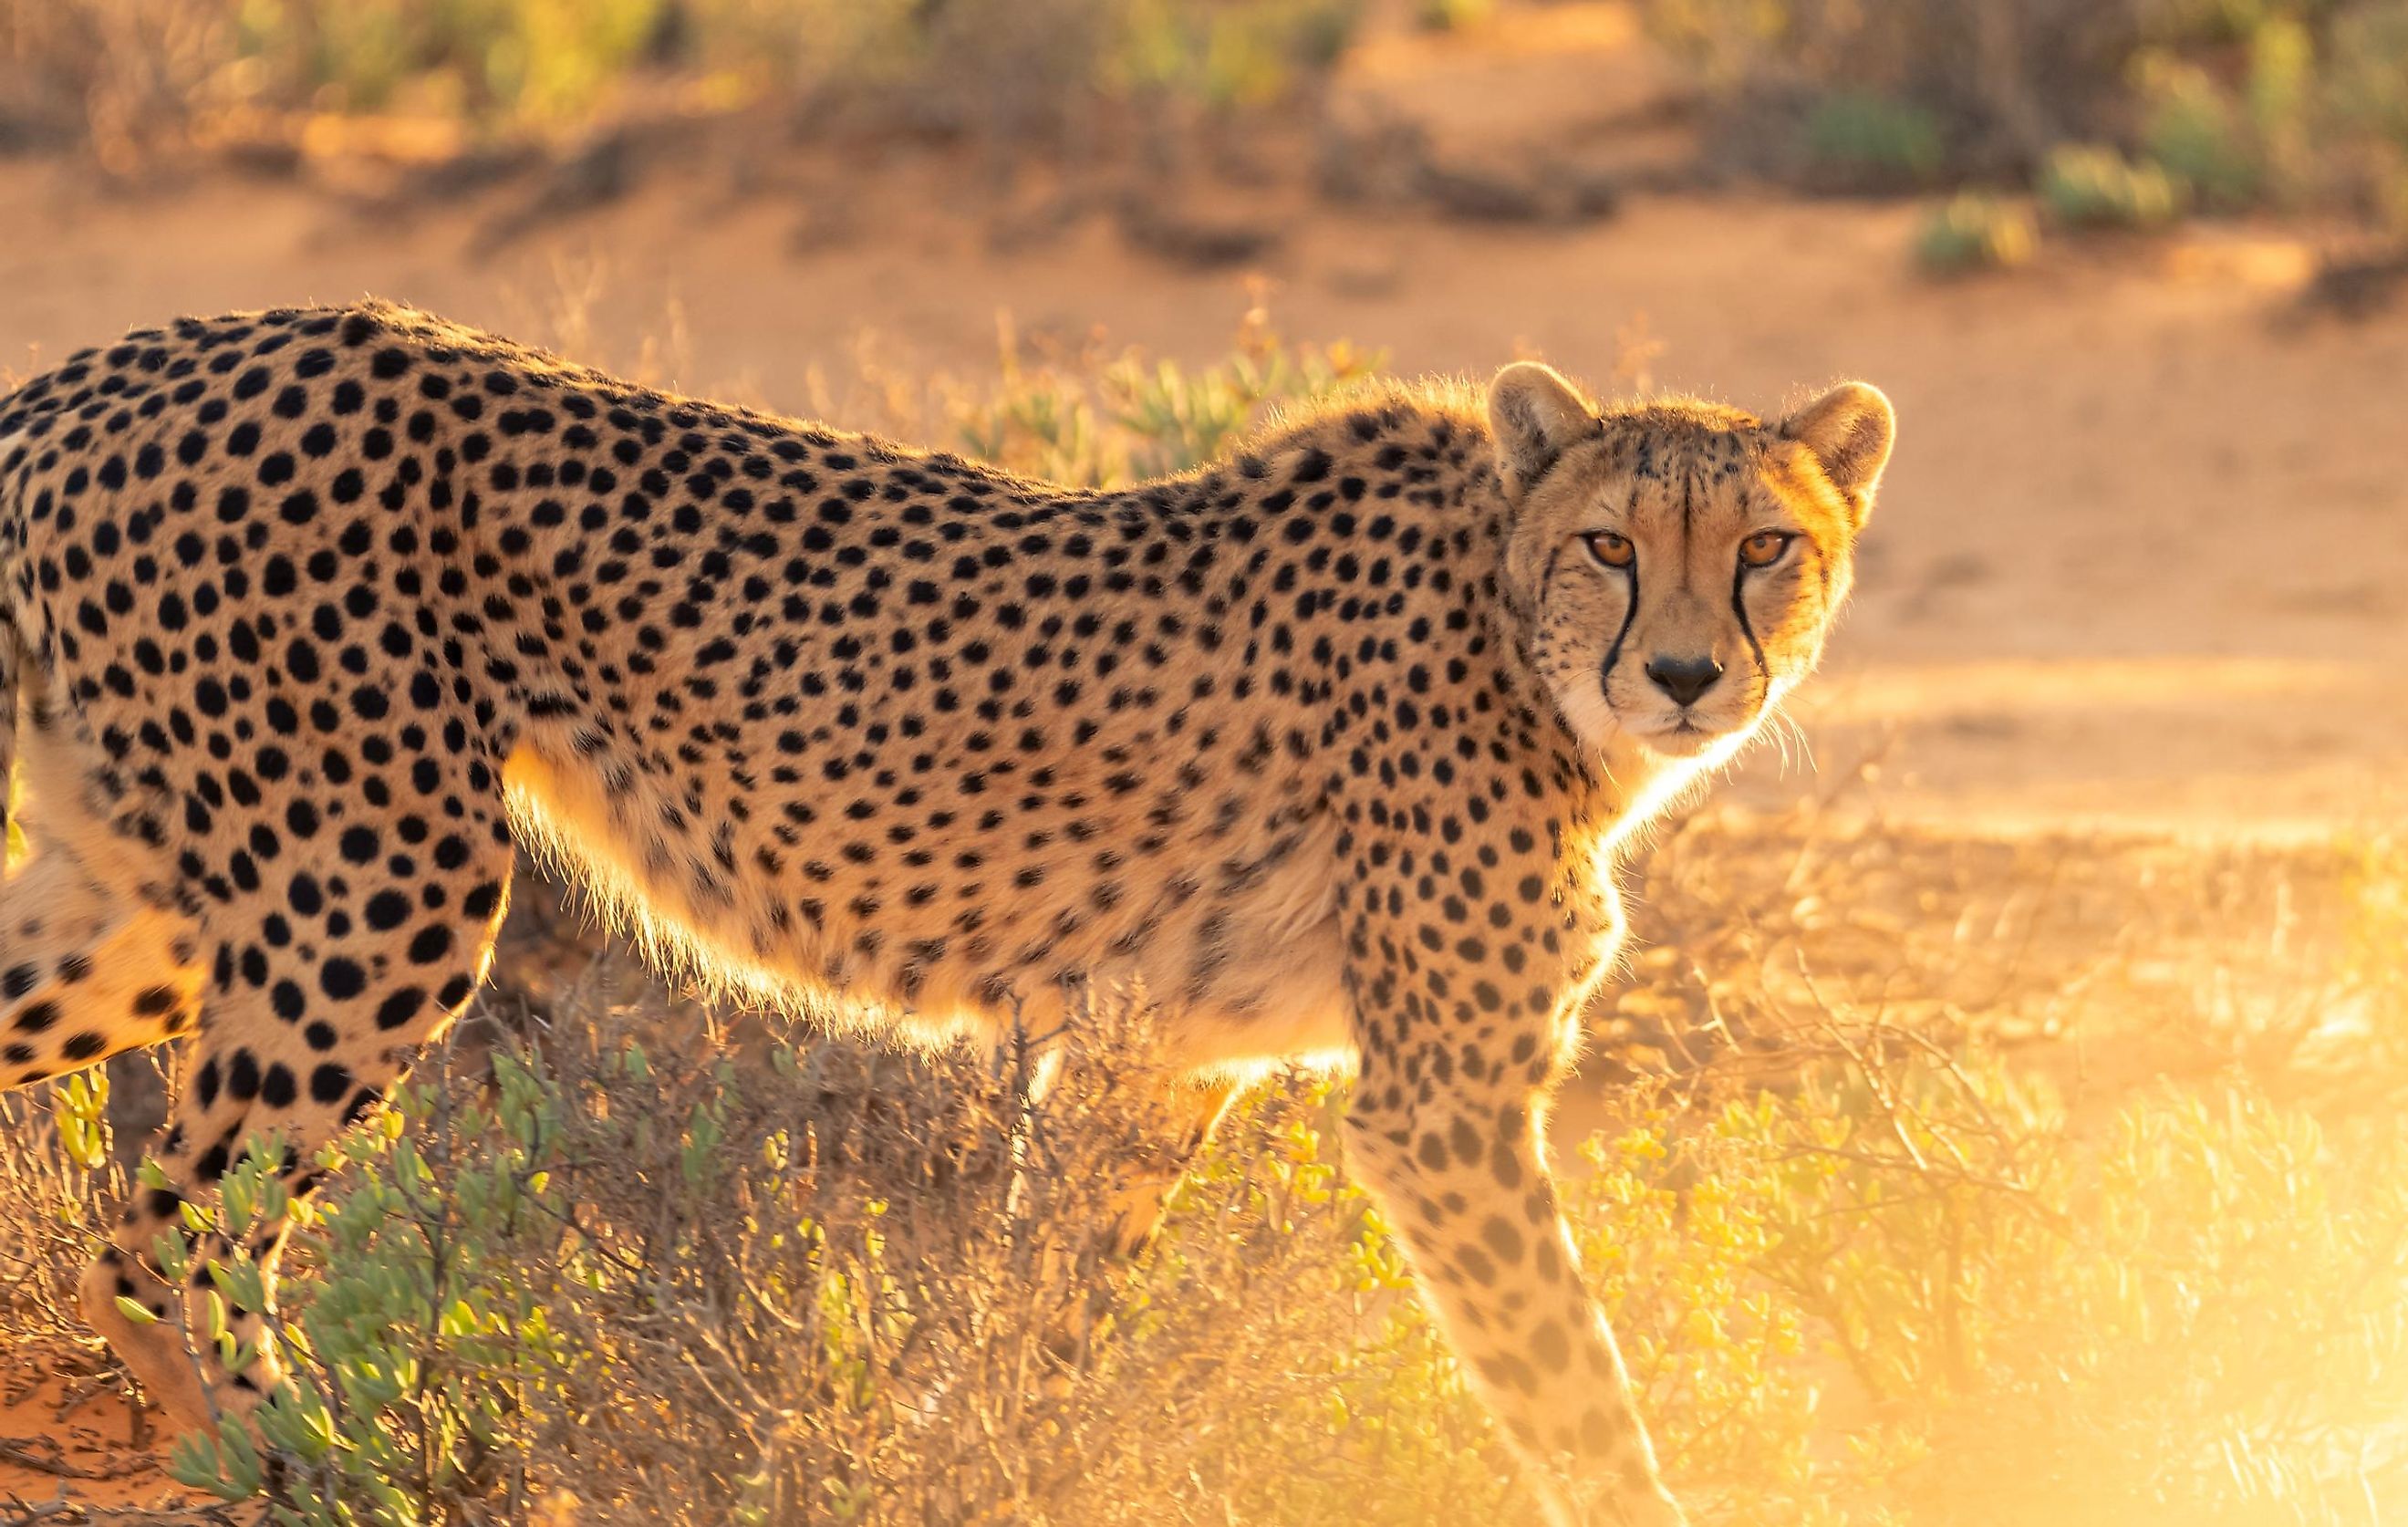 Key Similarities And Differences Between Jaguars And Cheetahs - WorldAtlas